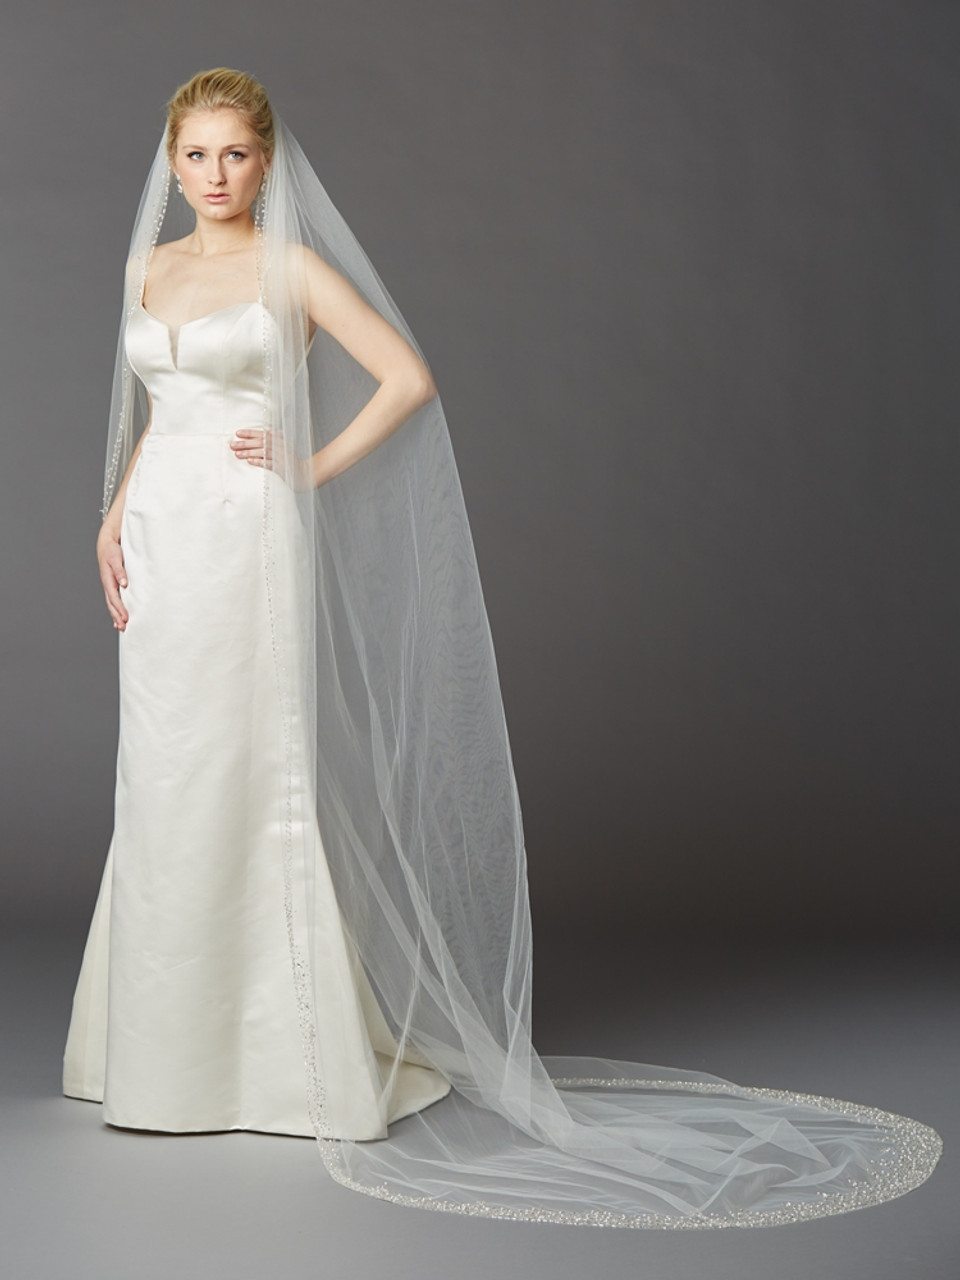 Opaque Beads and Pearls Wedding Veil  Wedding veil, Cathedral length  wedding veil, Cathedral wedding veils